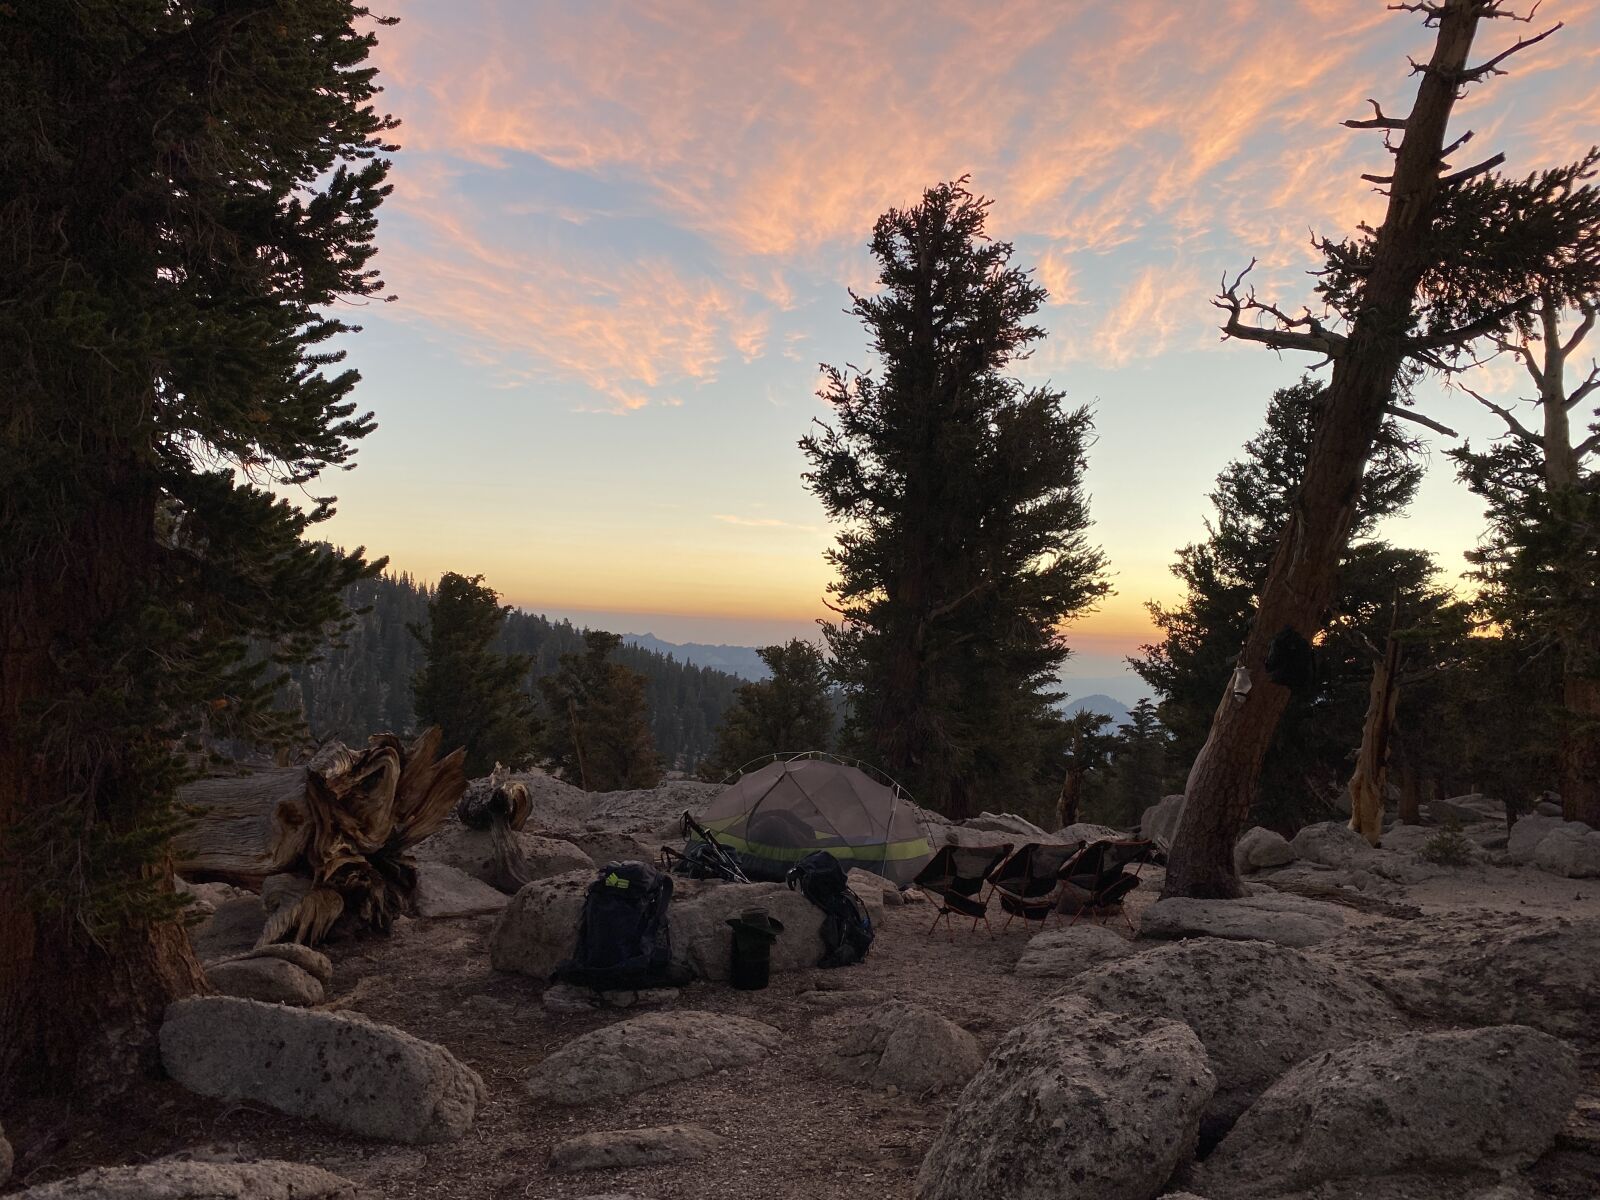 Apple iPhone 11 Pro sample photo. Sunrise campsite, nature, camping photography